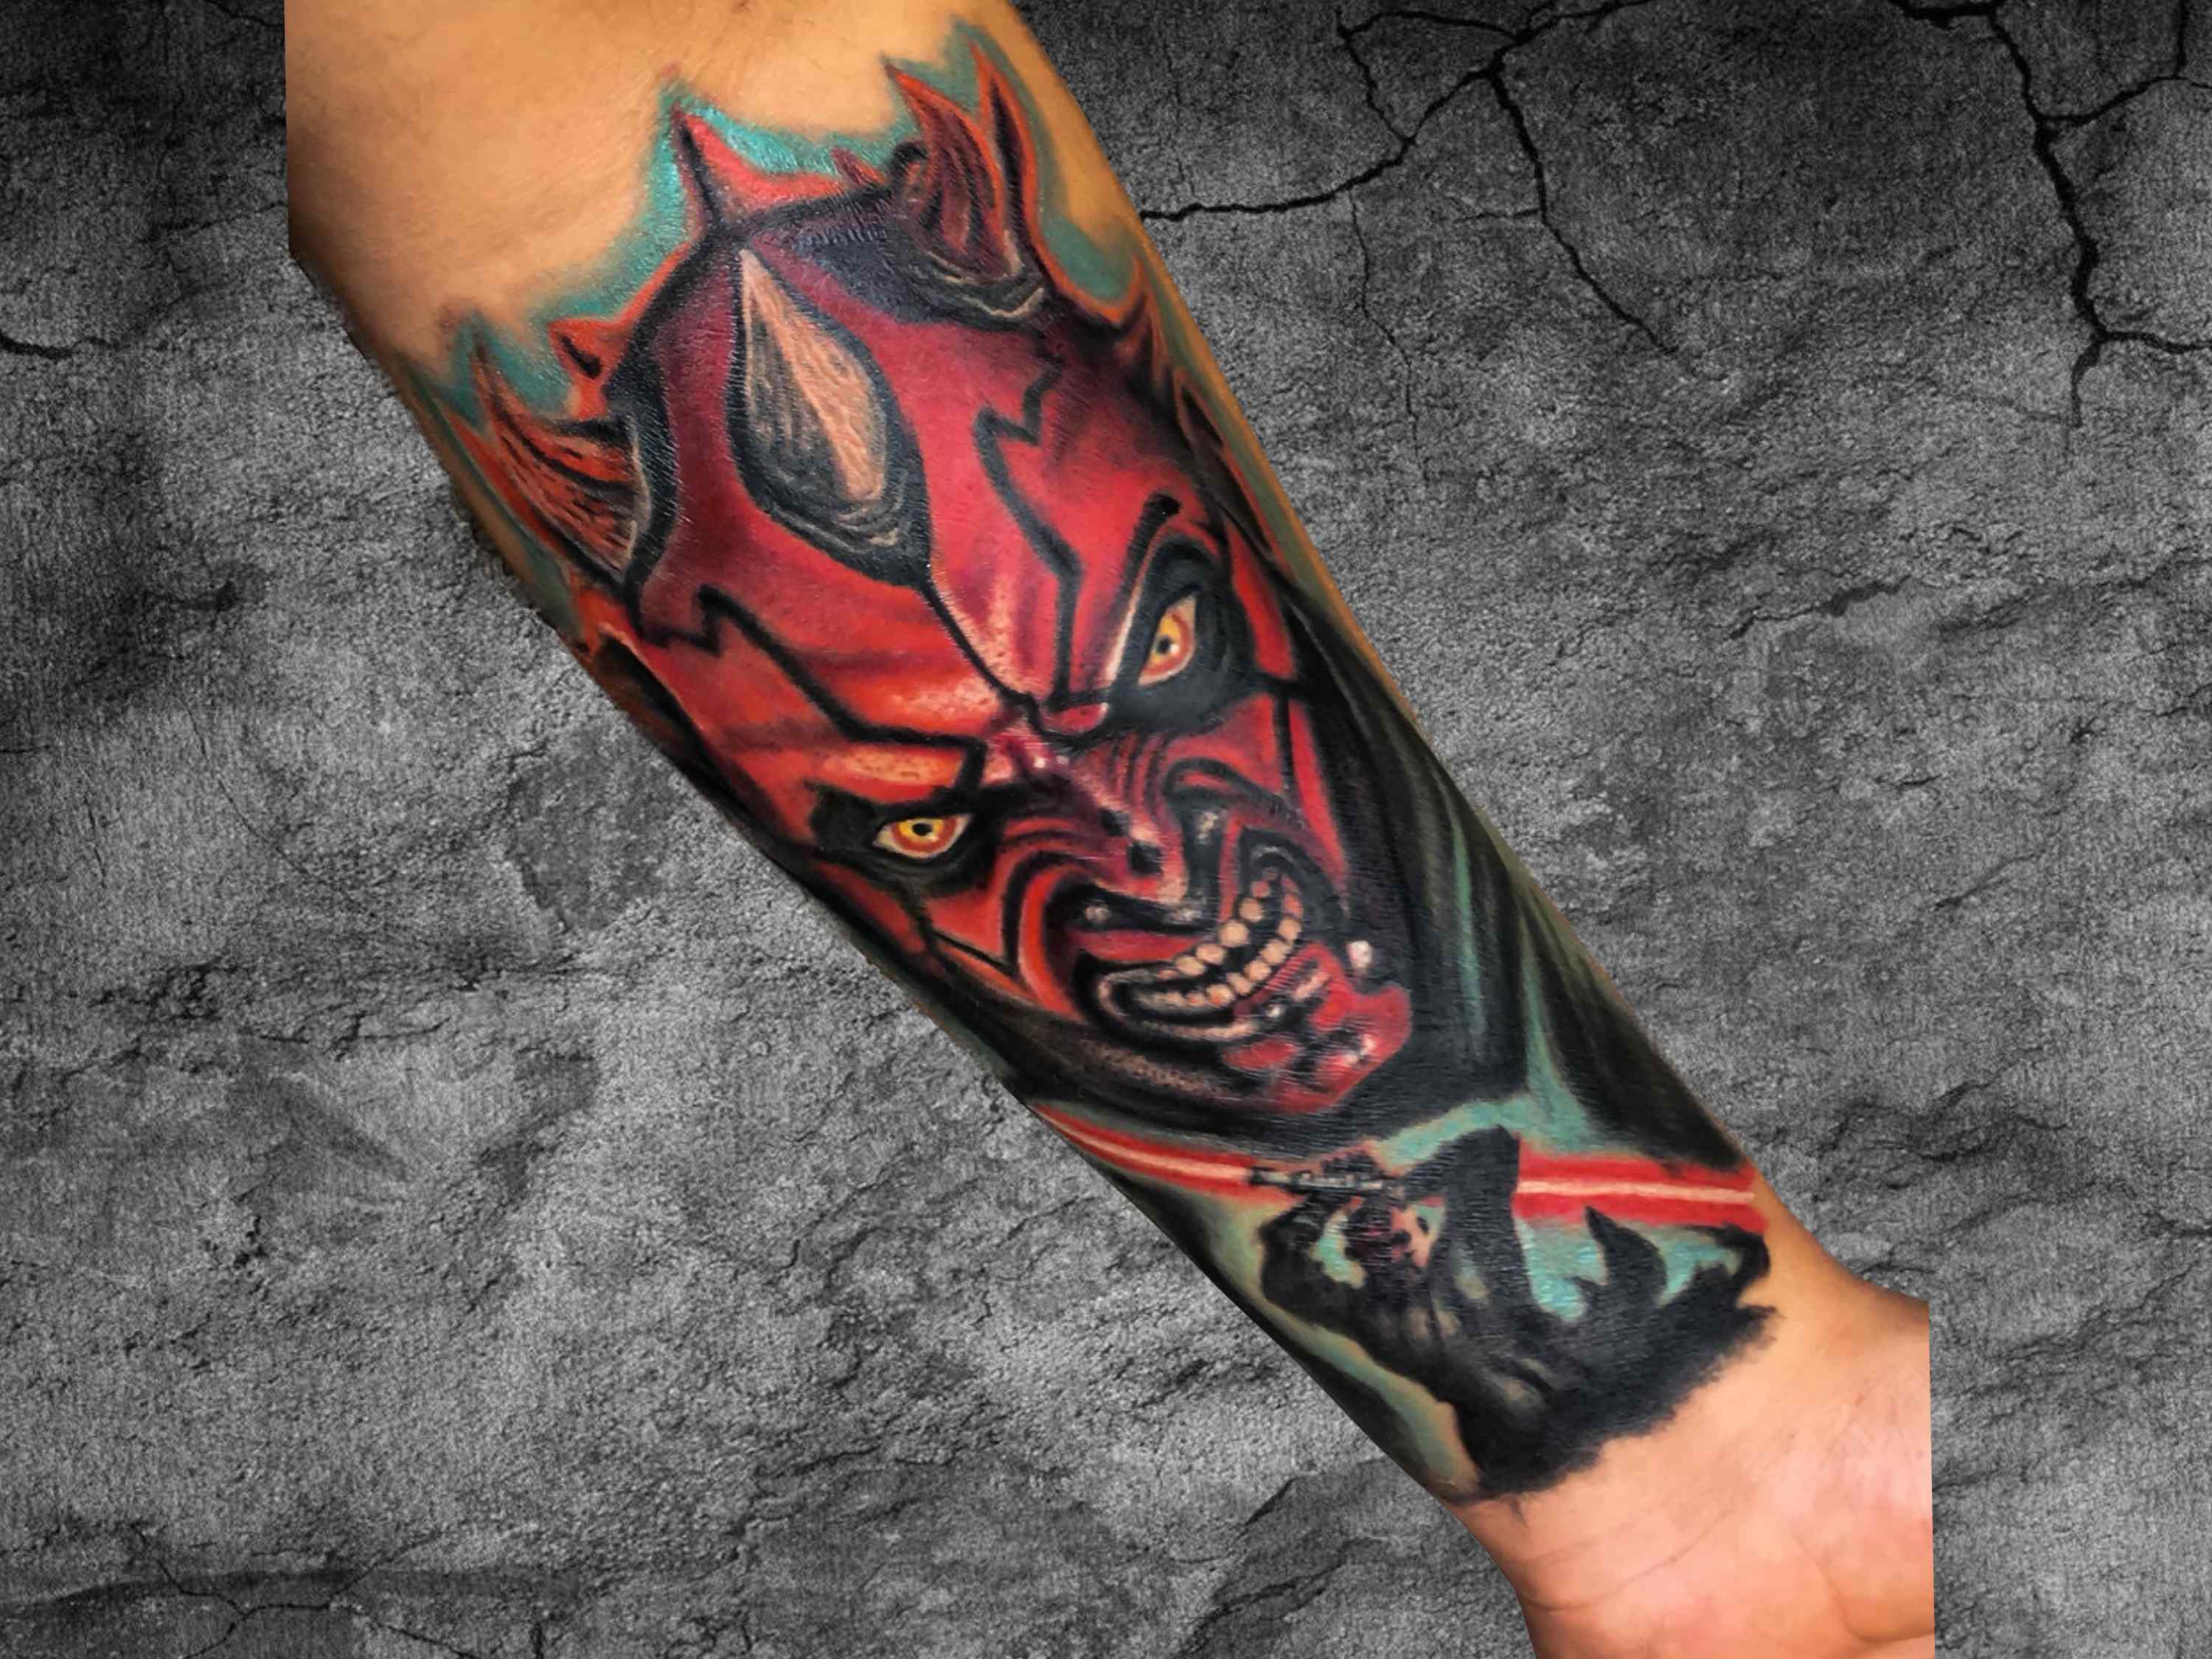 Stan's Tattoo - Kammanahalli...♡ 👉DM or call on 9738850686 or 8951385753  to get your dream tattoo 🖤 #tattoolovers #stantattoo  #bangaloretattooartist #bangalore #instabangalore #bangaloredays  #photoeveryday #photogrid #photogram #bangaloreblogger ...